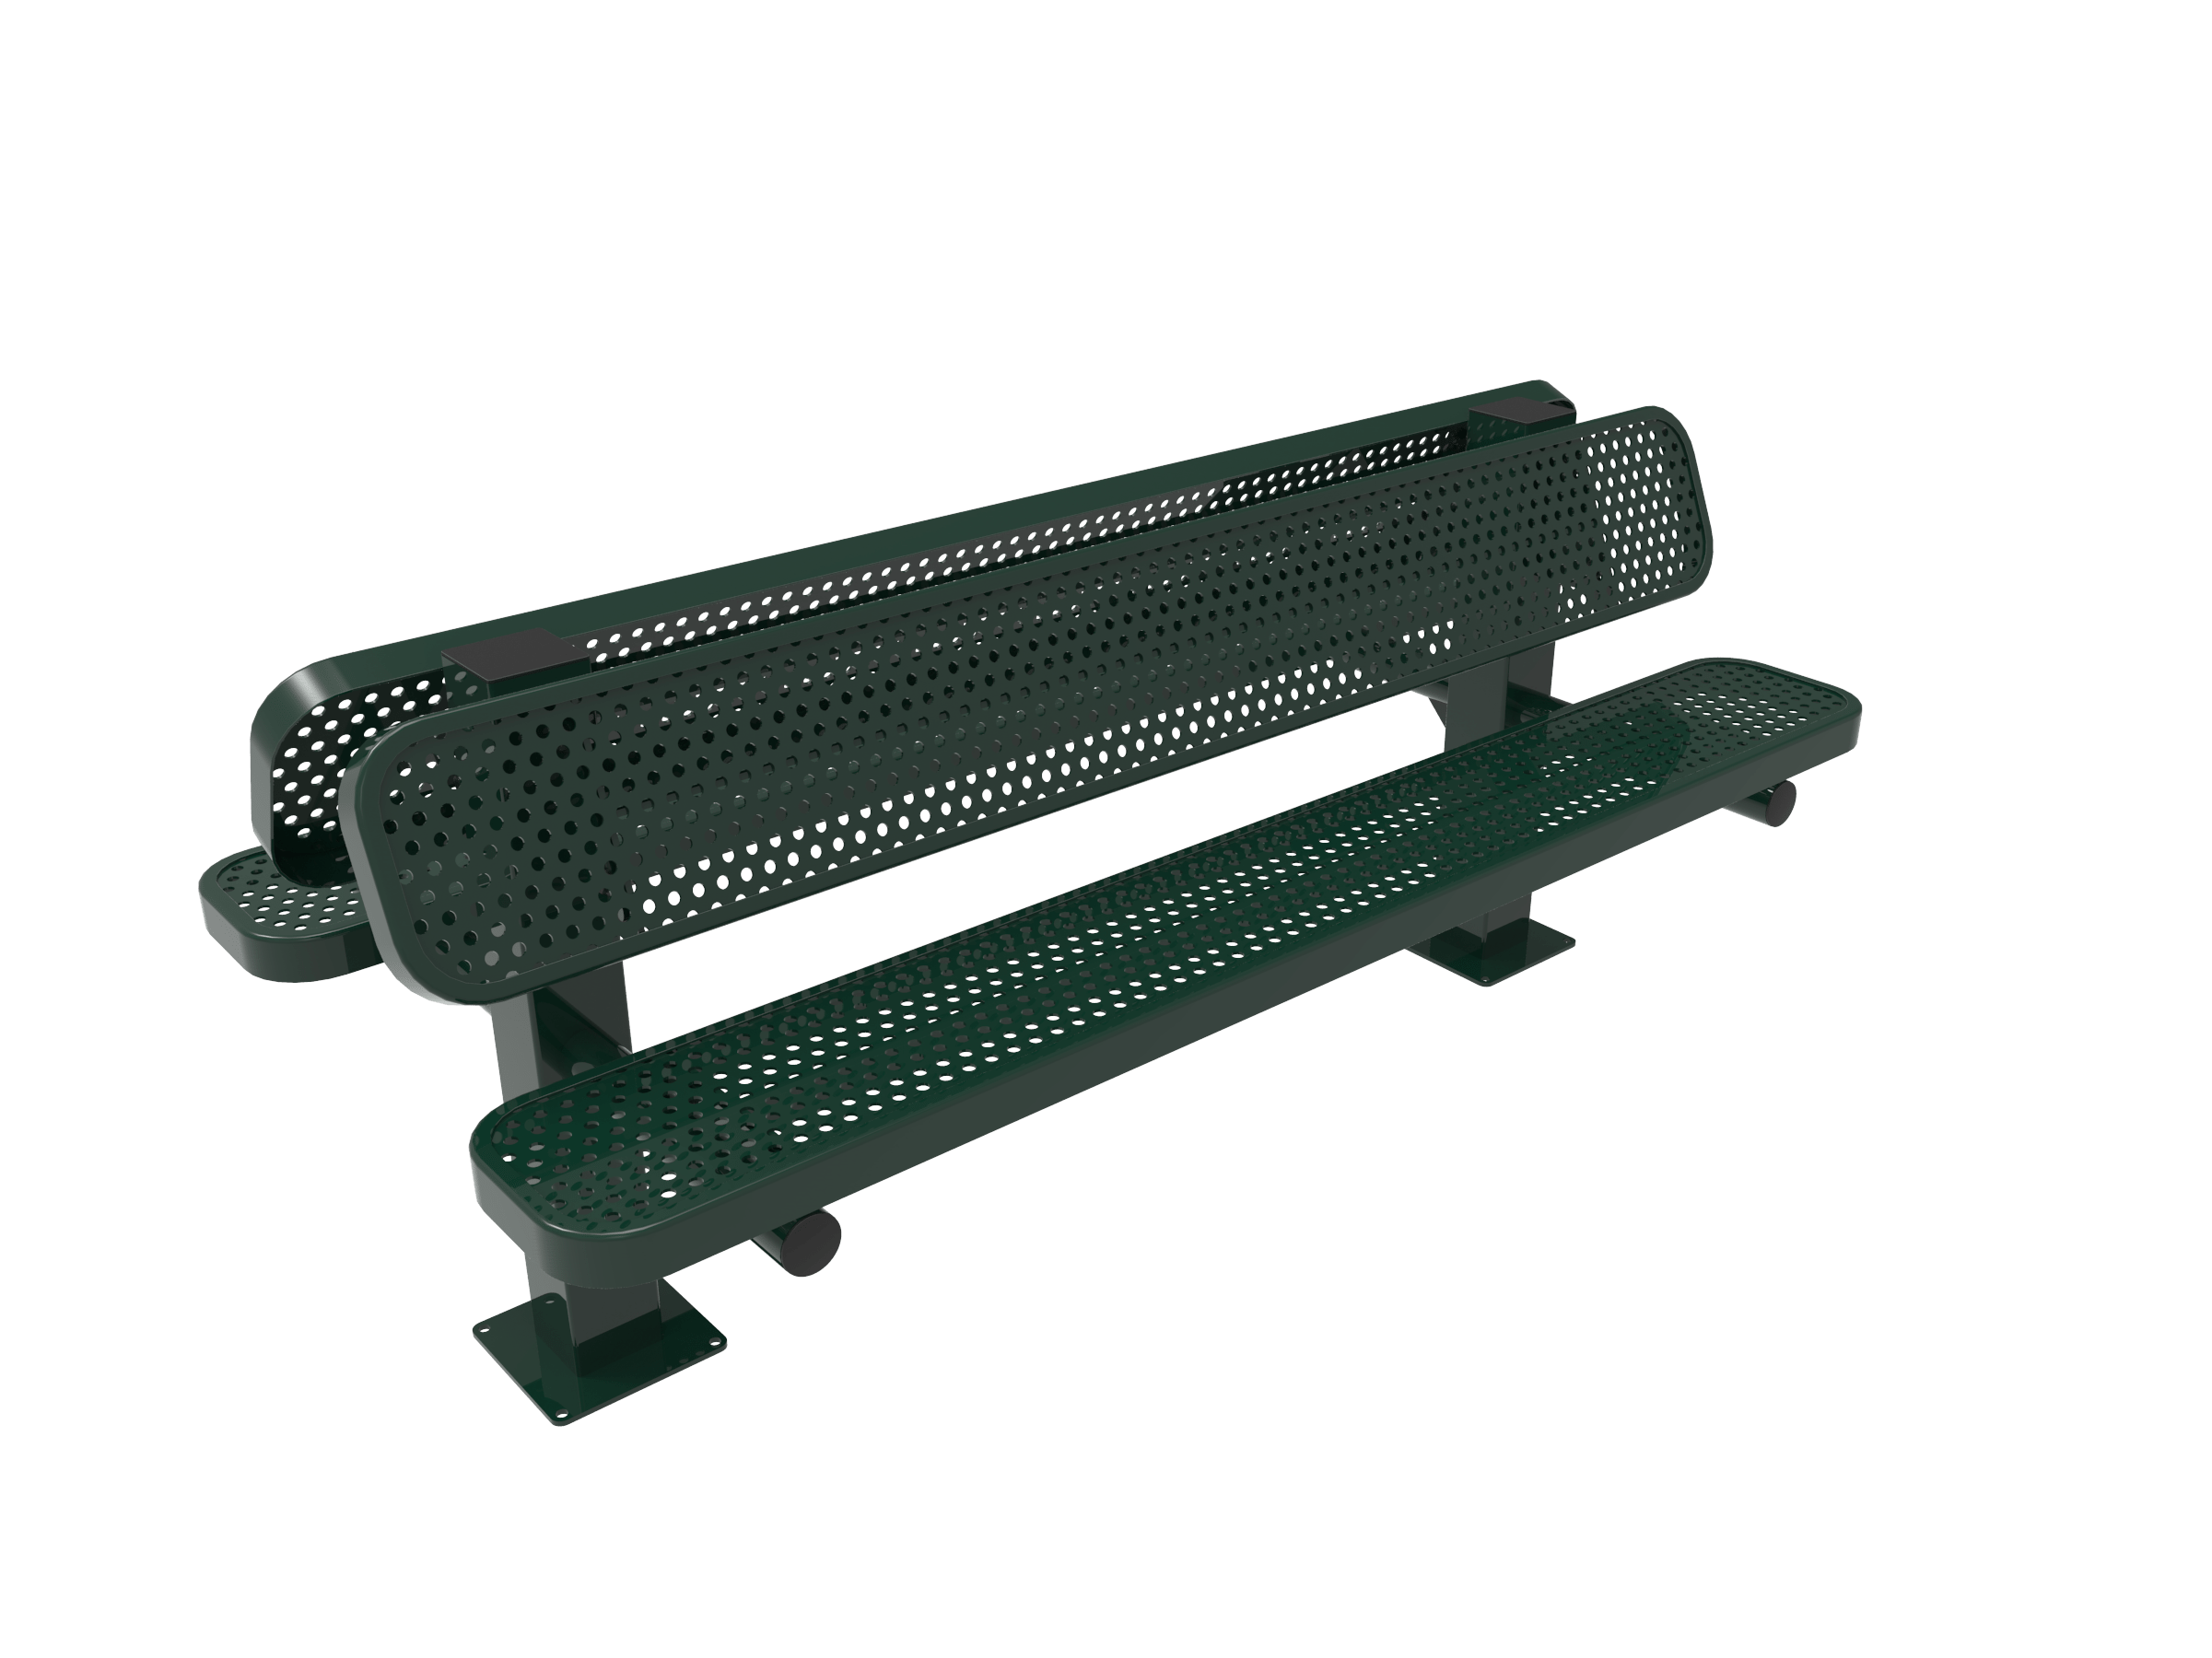 6′ Double Pedestal Bench-Punched
BRT06-D-62-002
Industry Standard Finish
$1429.00
BRT06-B-62-002
Advantage Premium Finish
$1789.00
